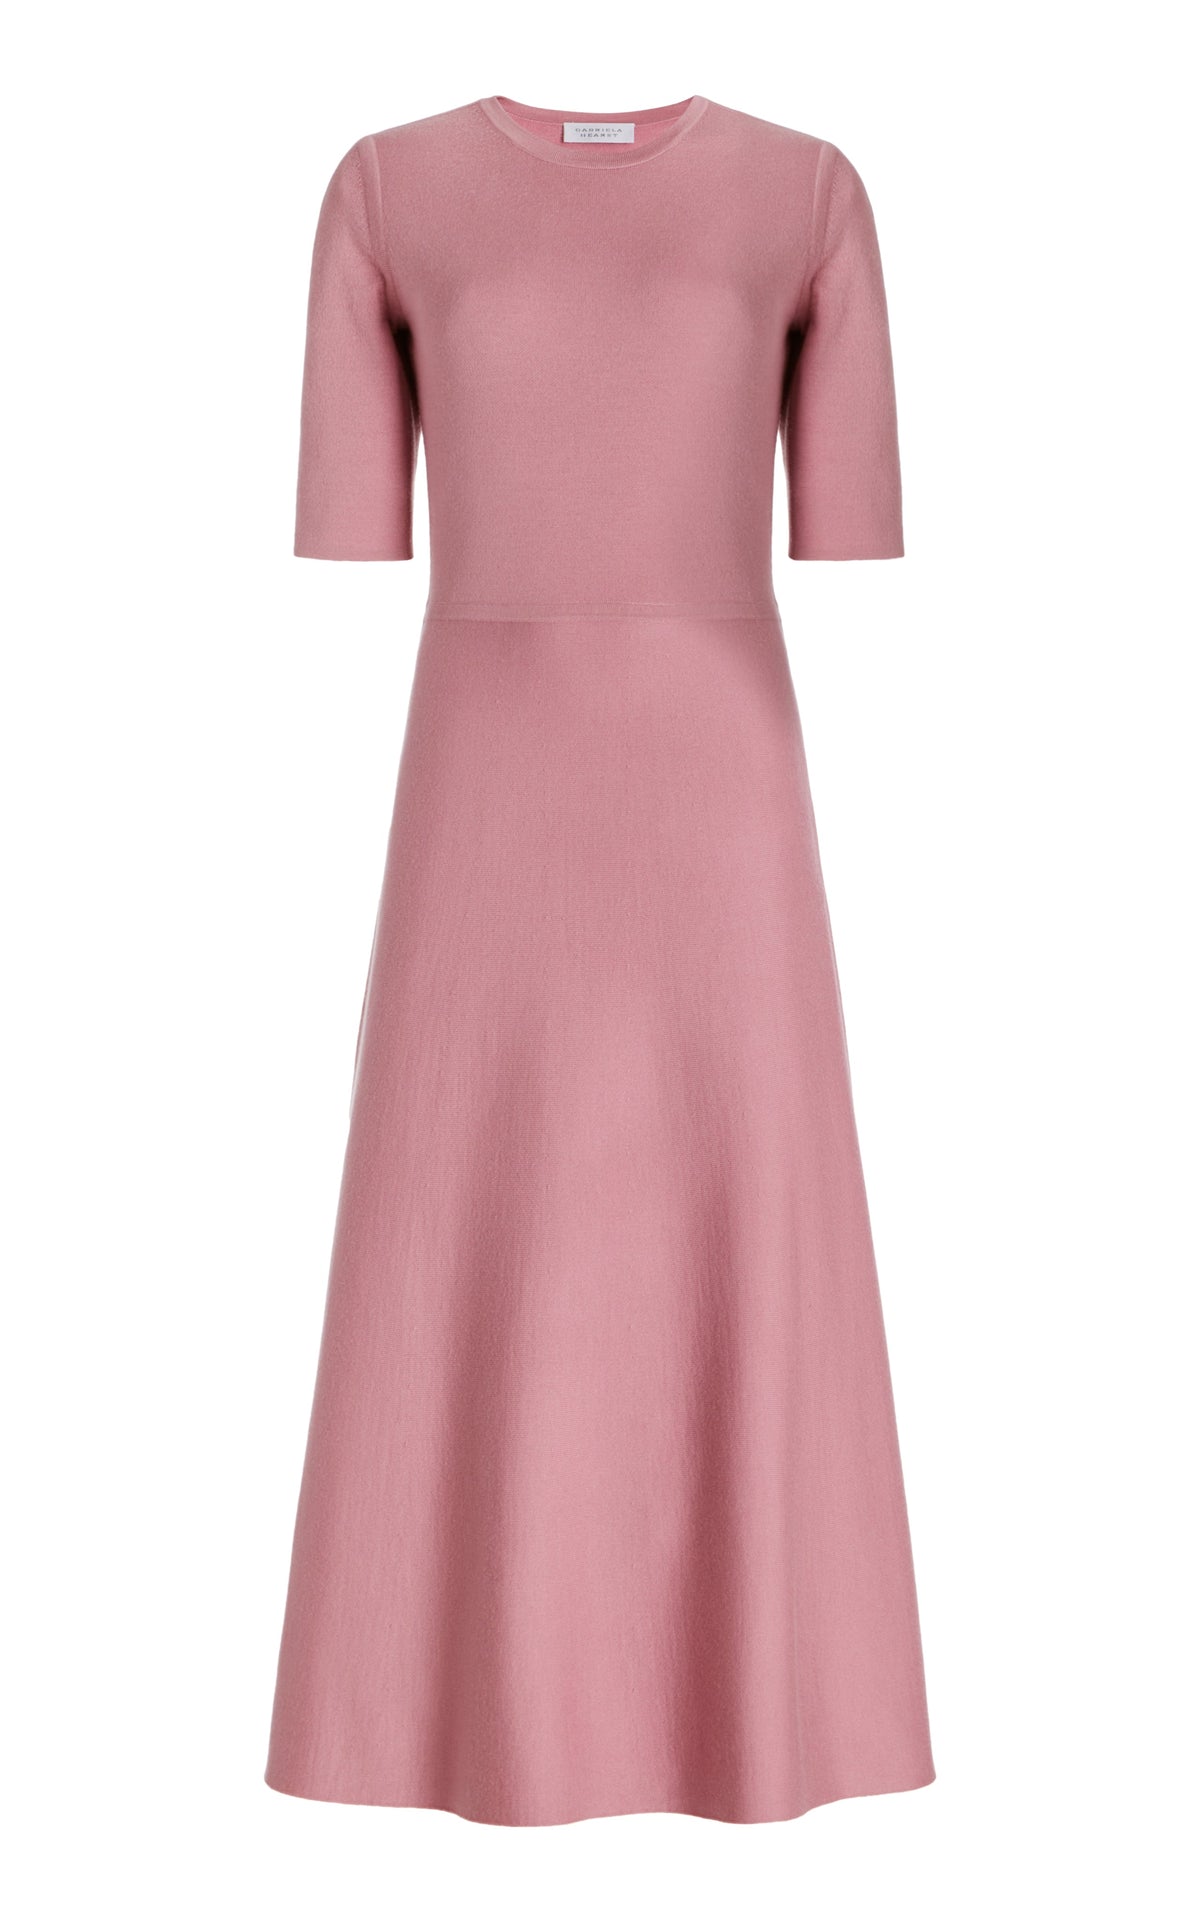 Seymore Knit Dress in Rose Quartz Cashmere Merino Wool